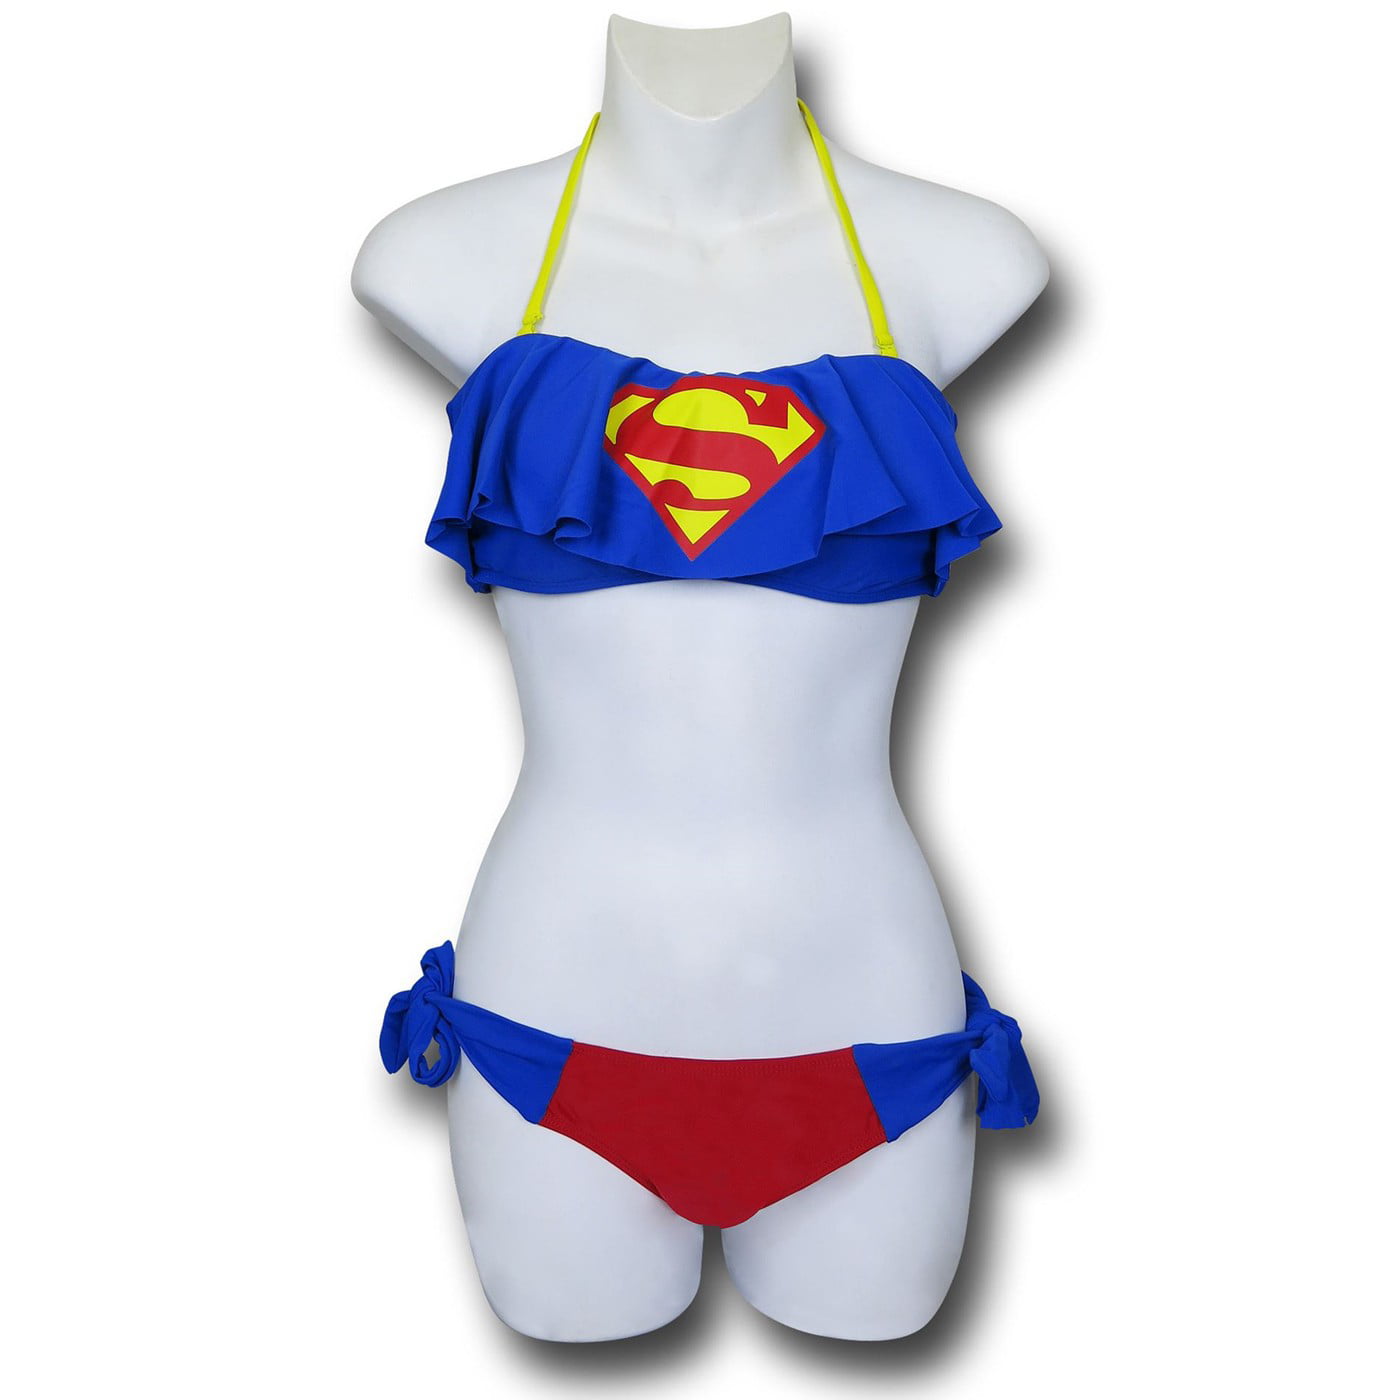 Buy Supergirl Cami Bandeau Bikini-Large (10-12) at Walmart.com. 